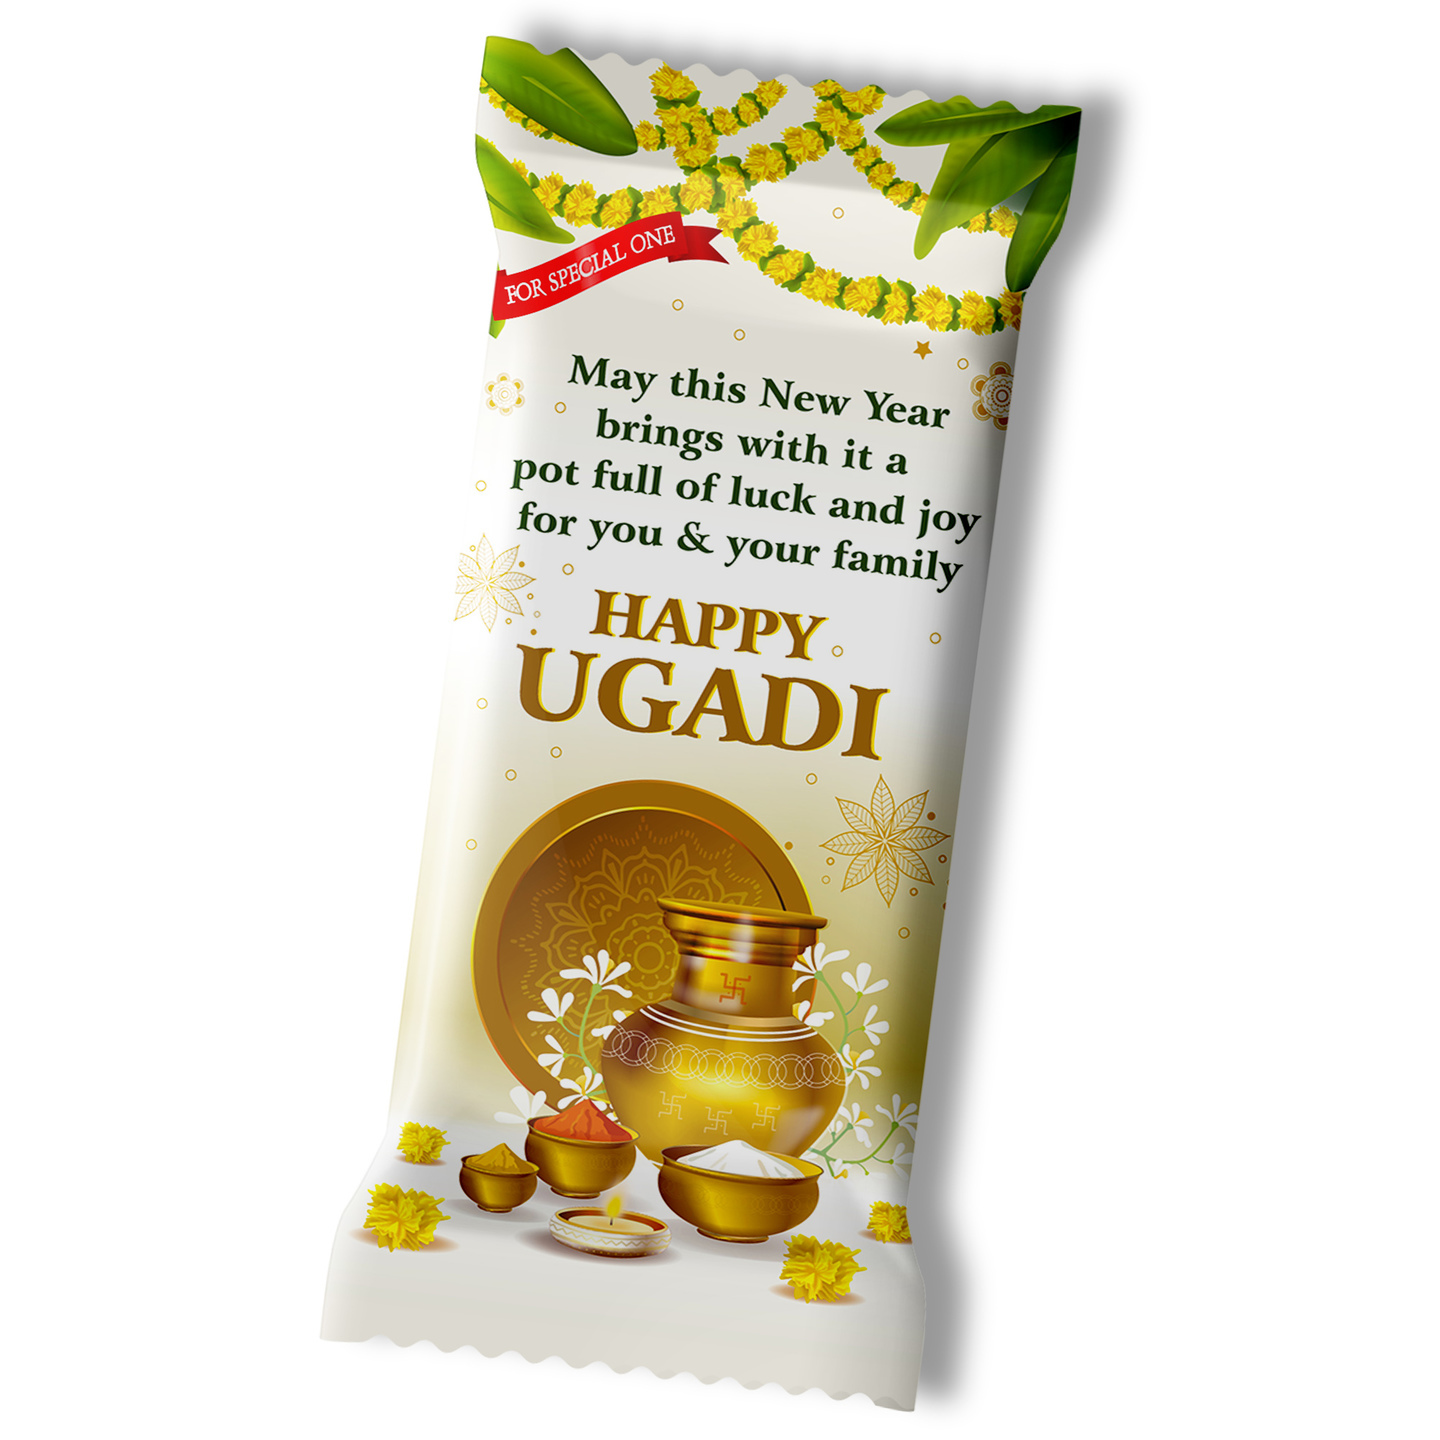 Ugadi Gift, Chocolate Large Bar - 100g